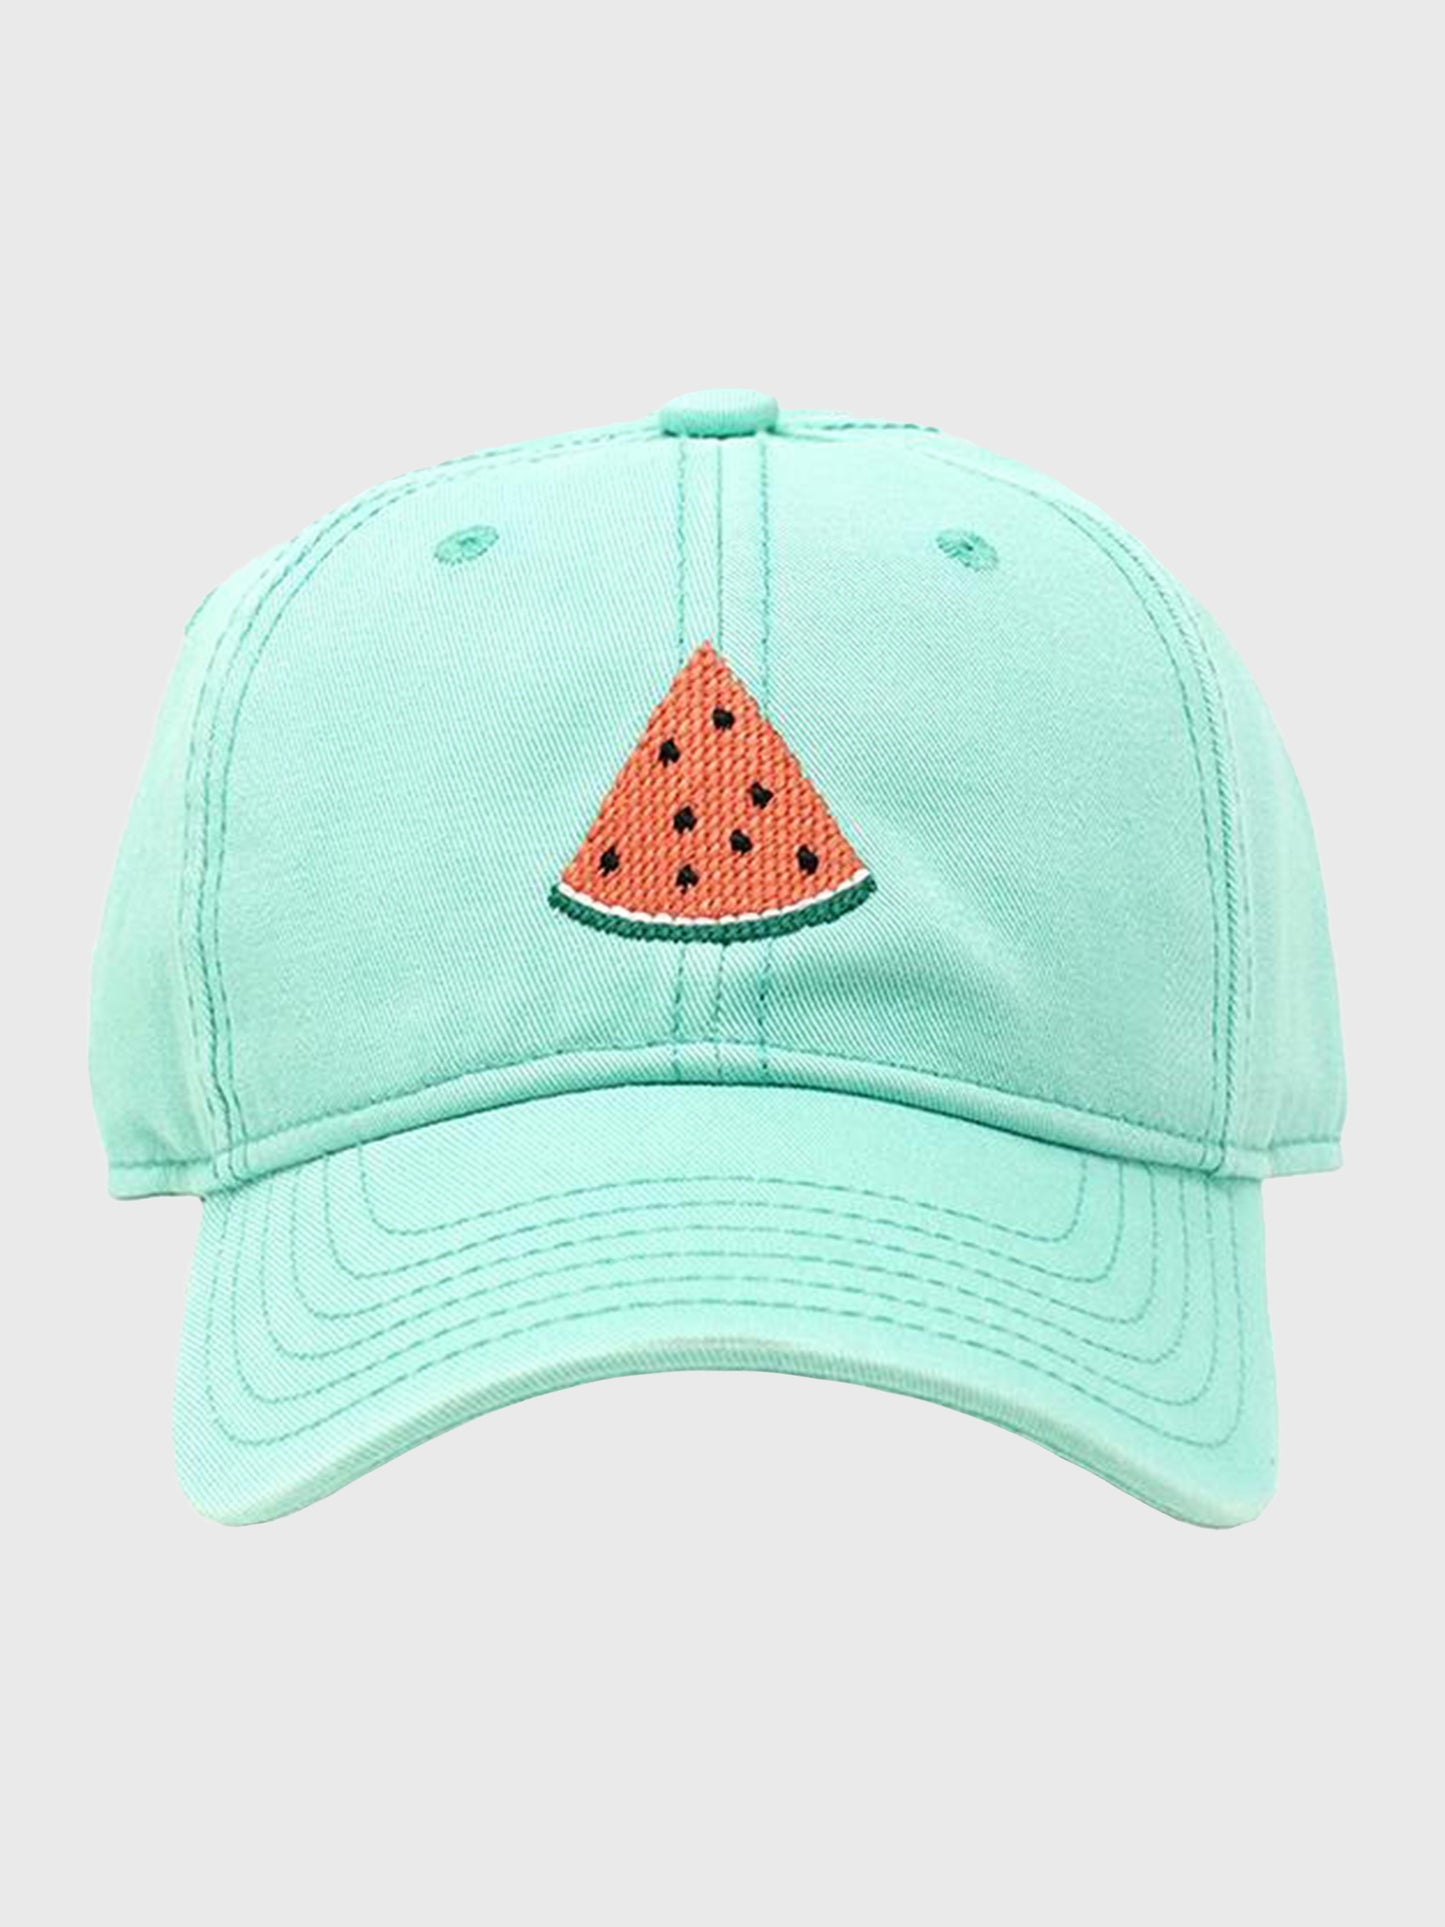 Harding Lane Kids' Watermelon Hat